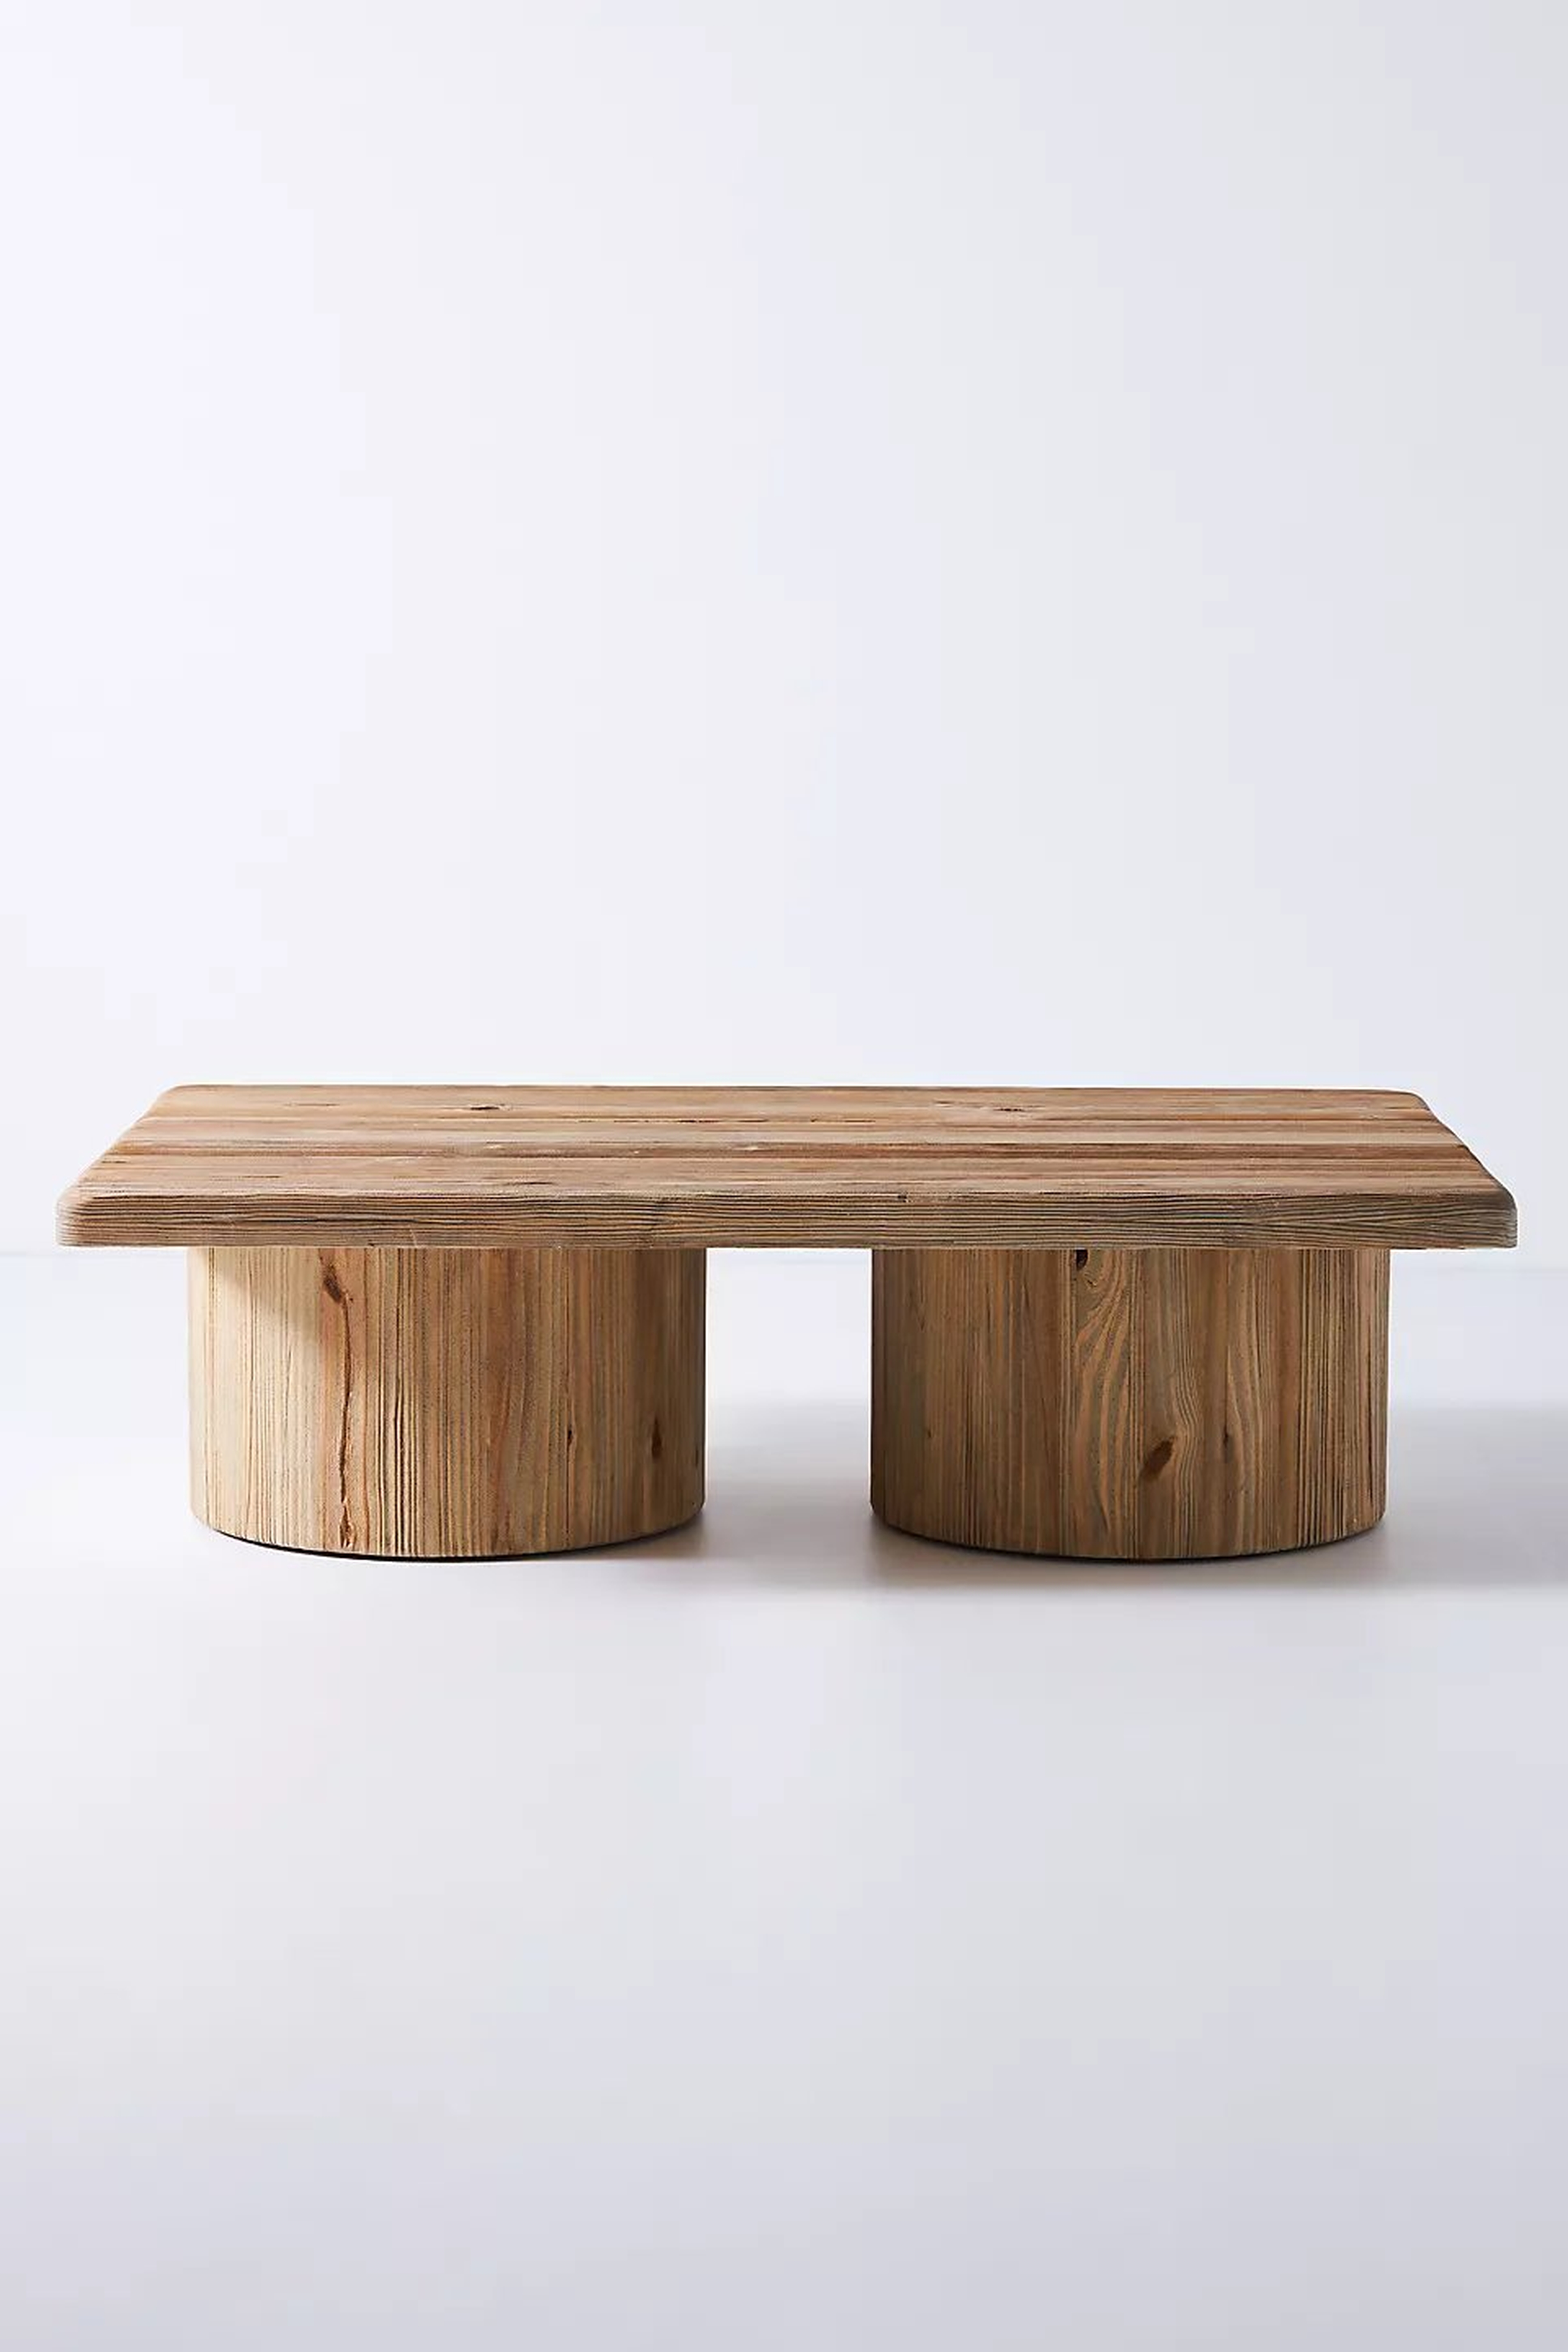 Margate Reclaimed Wood Coffee Table, Beige - Anthropologie